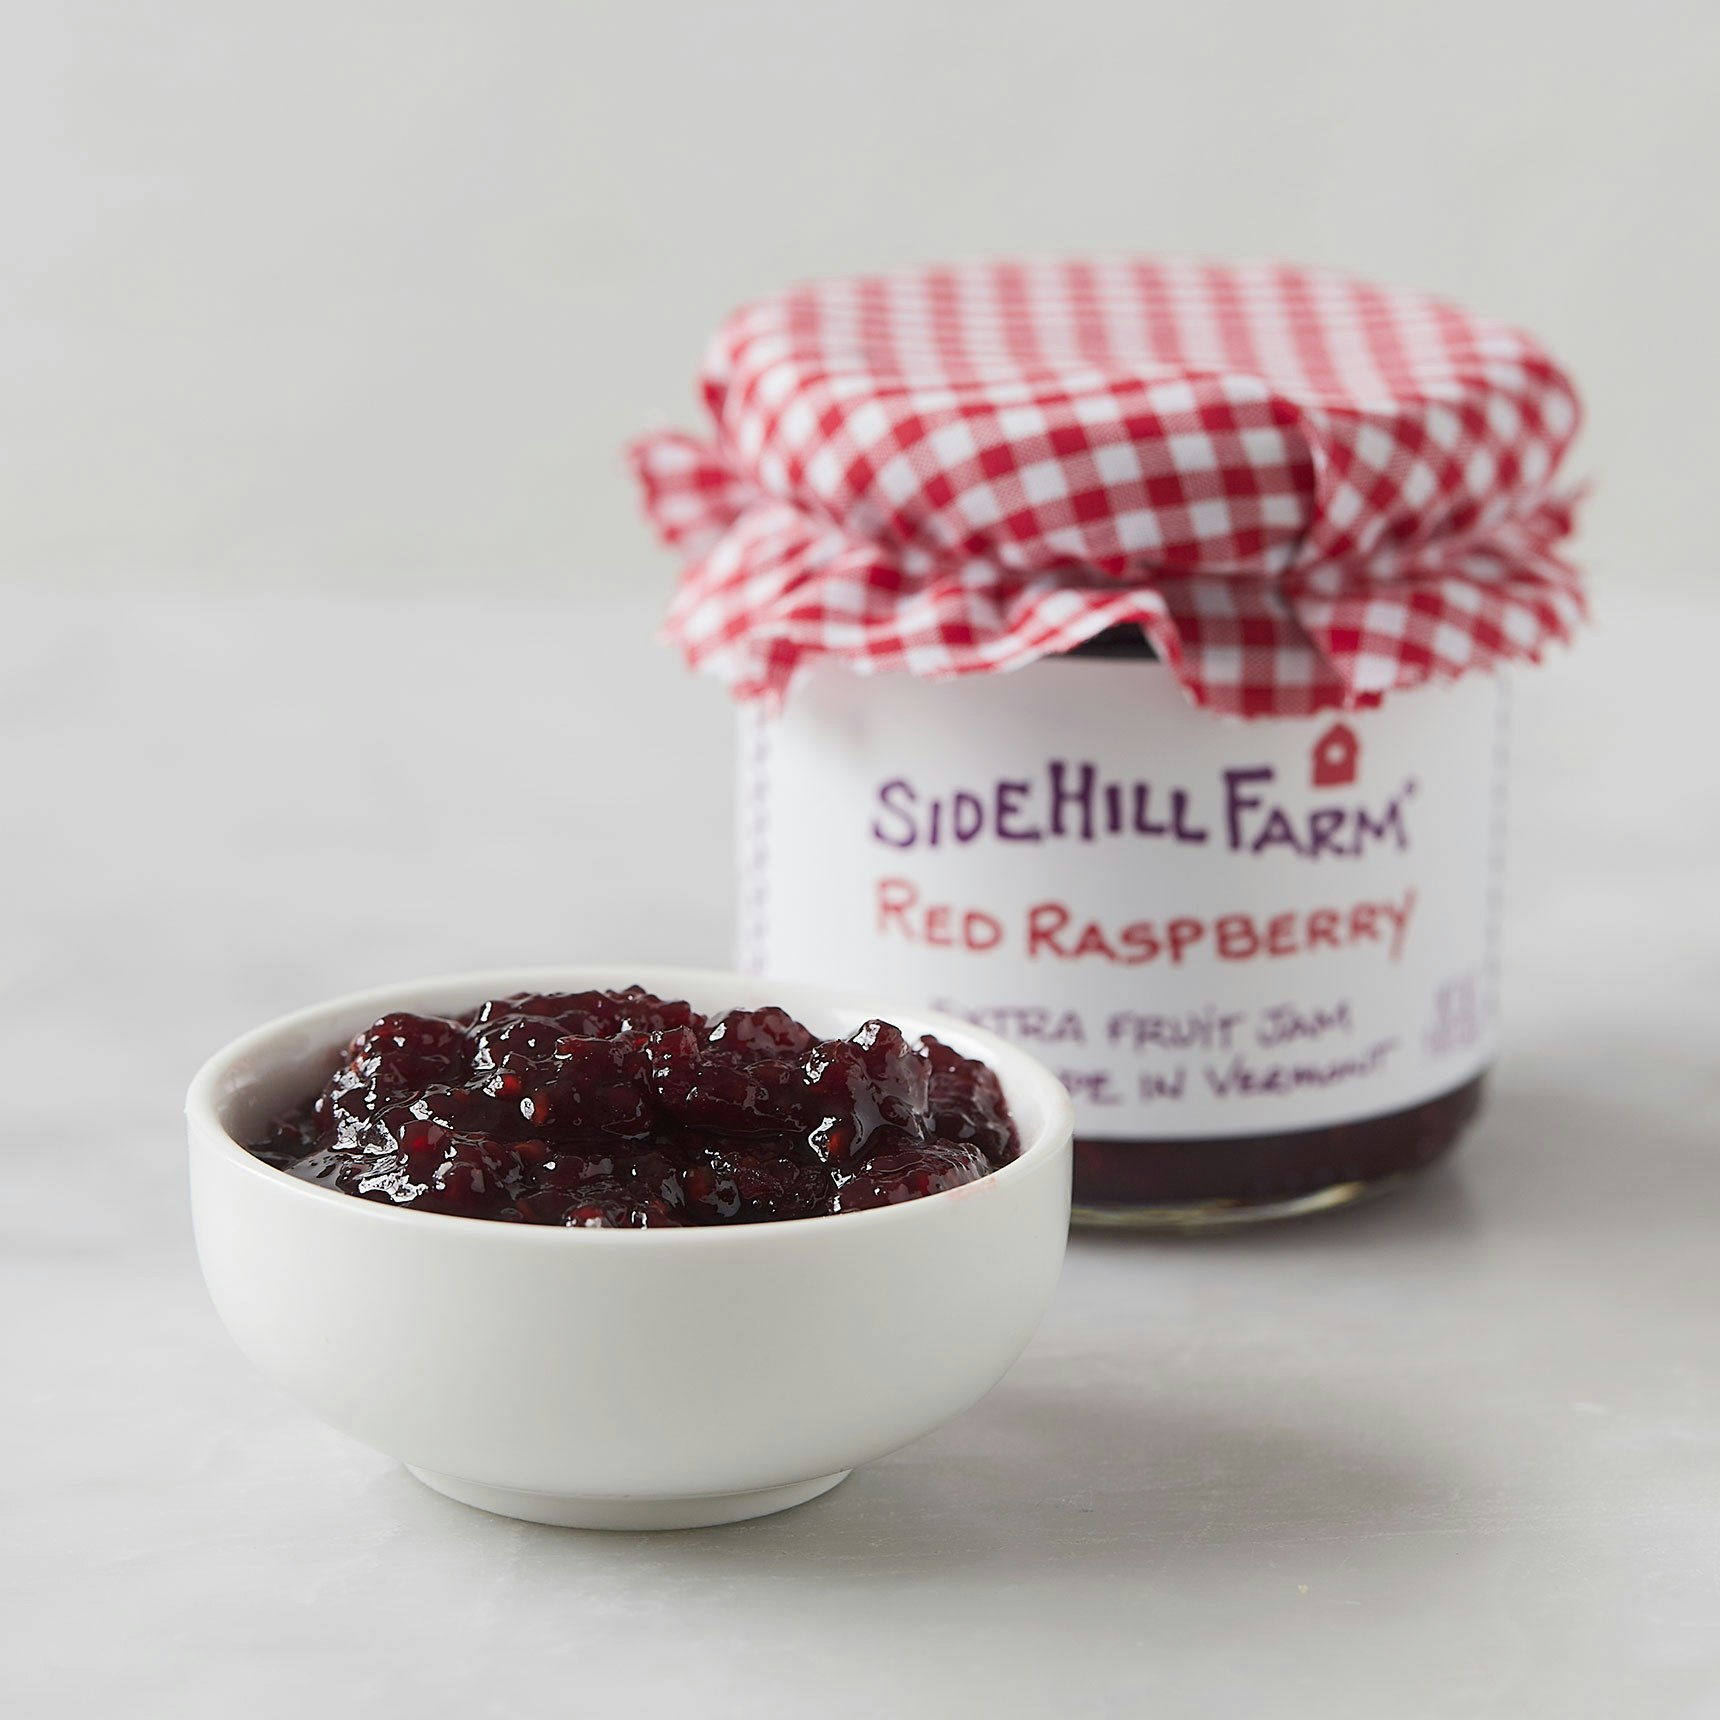 sidehill farm raspberry jam specialty foods